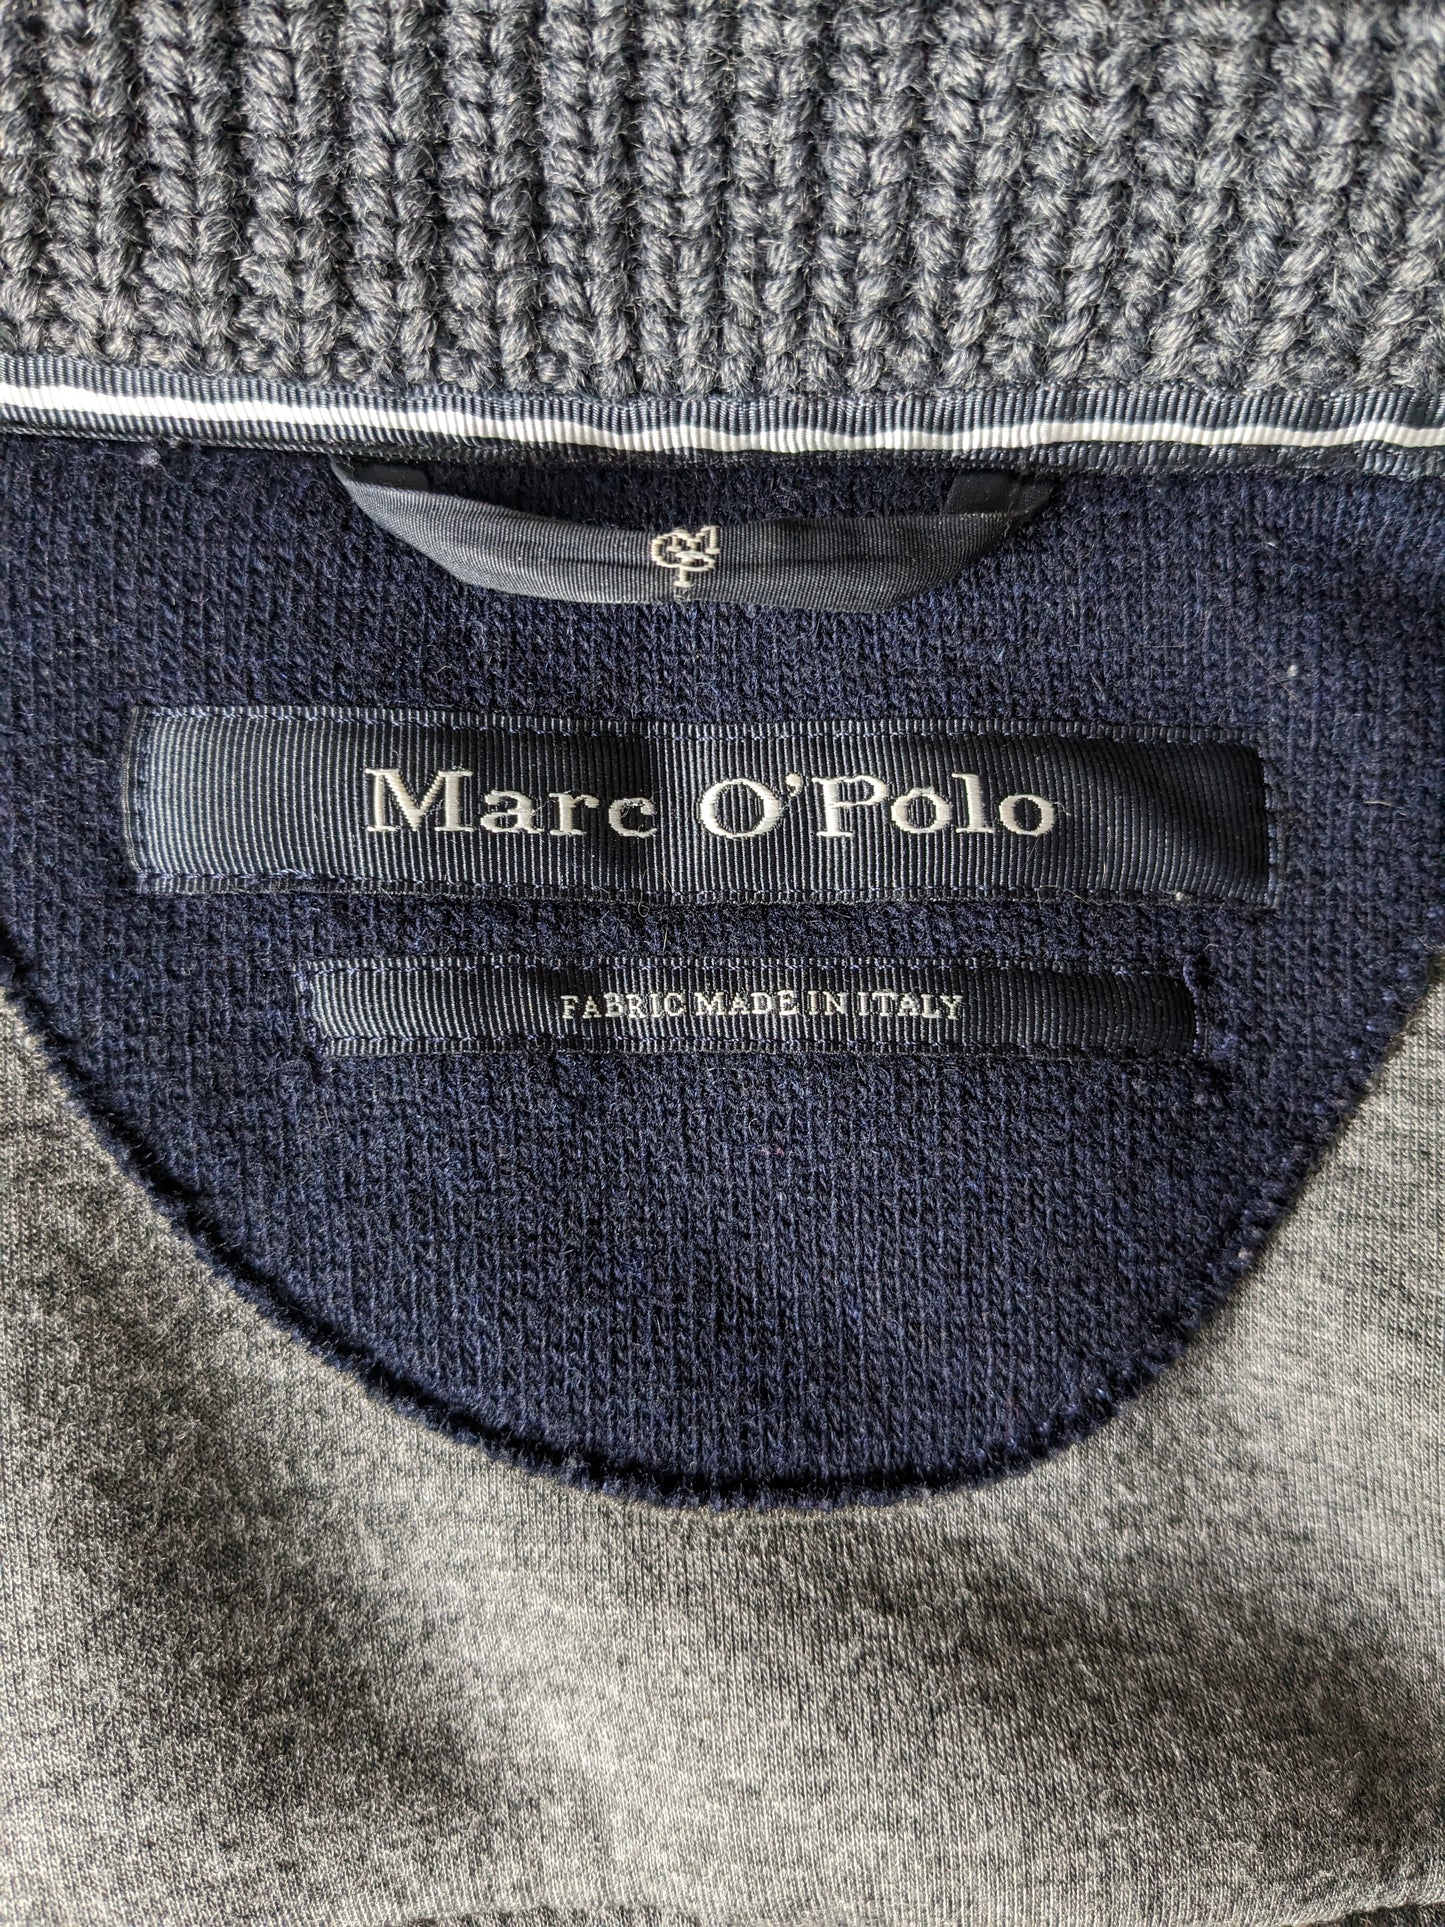 Marc O'Polo Wollen halflange jas. Donker Blauw Grijs gekleurd. Maat M.